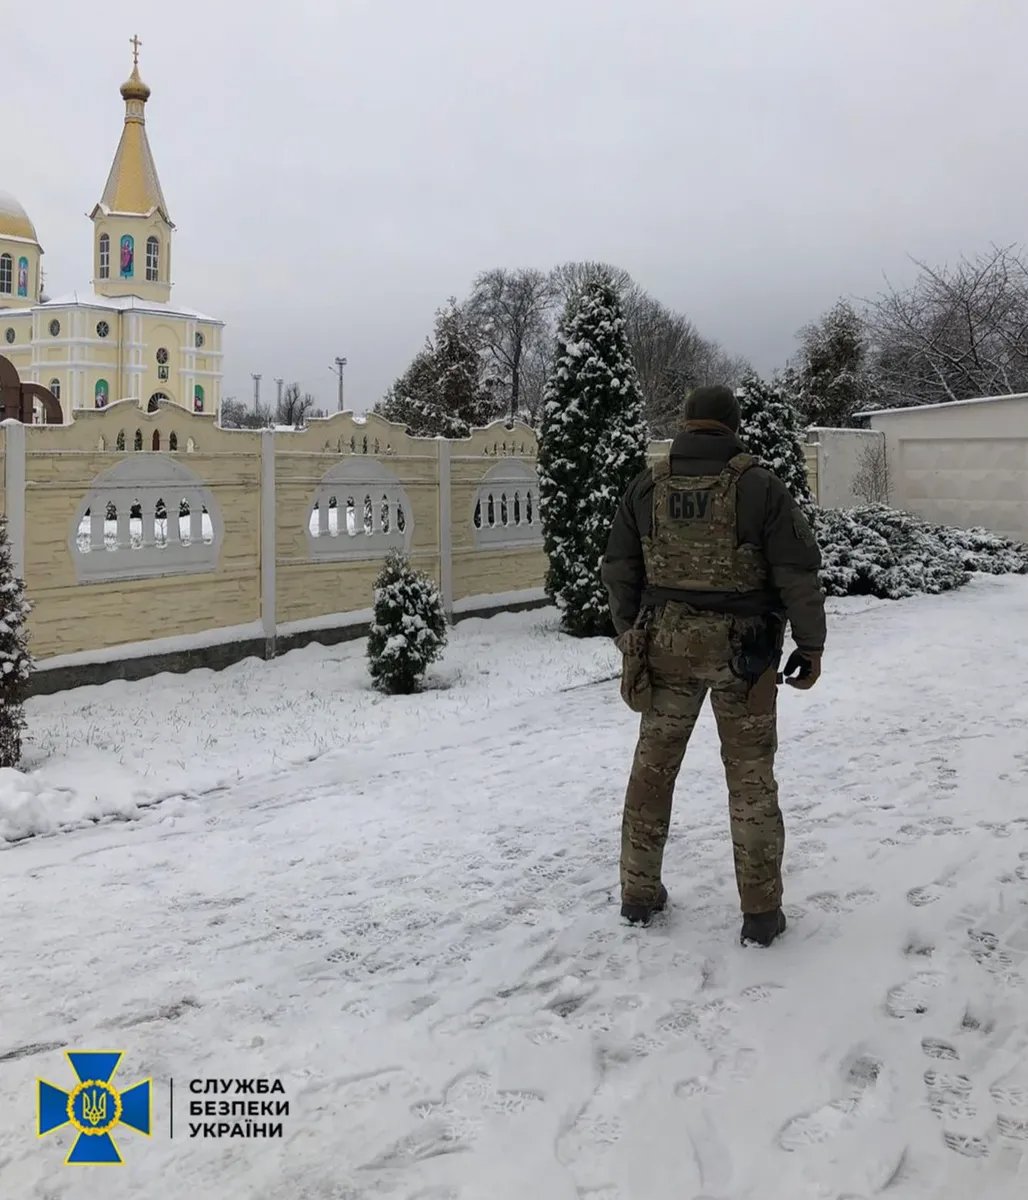 Photy by Ukraine’s Security Service